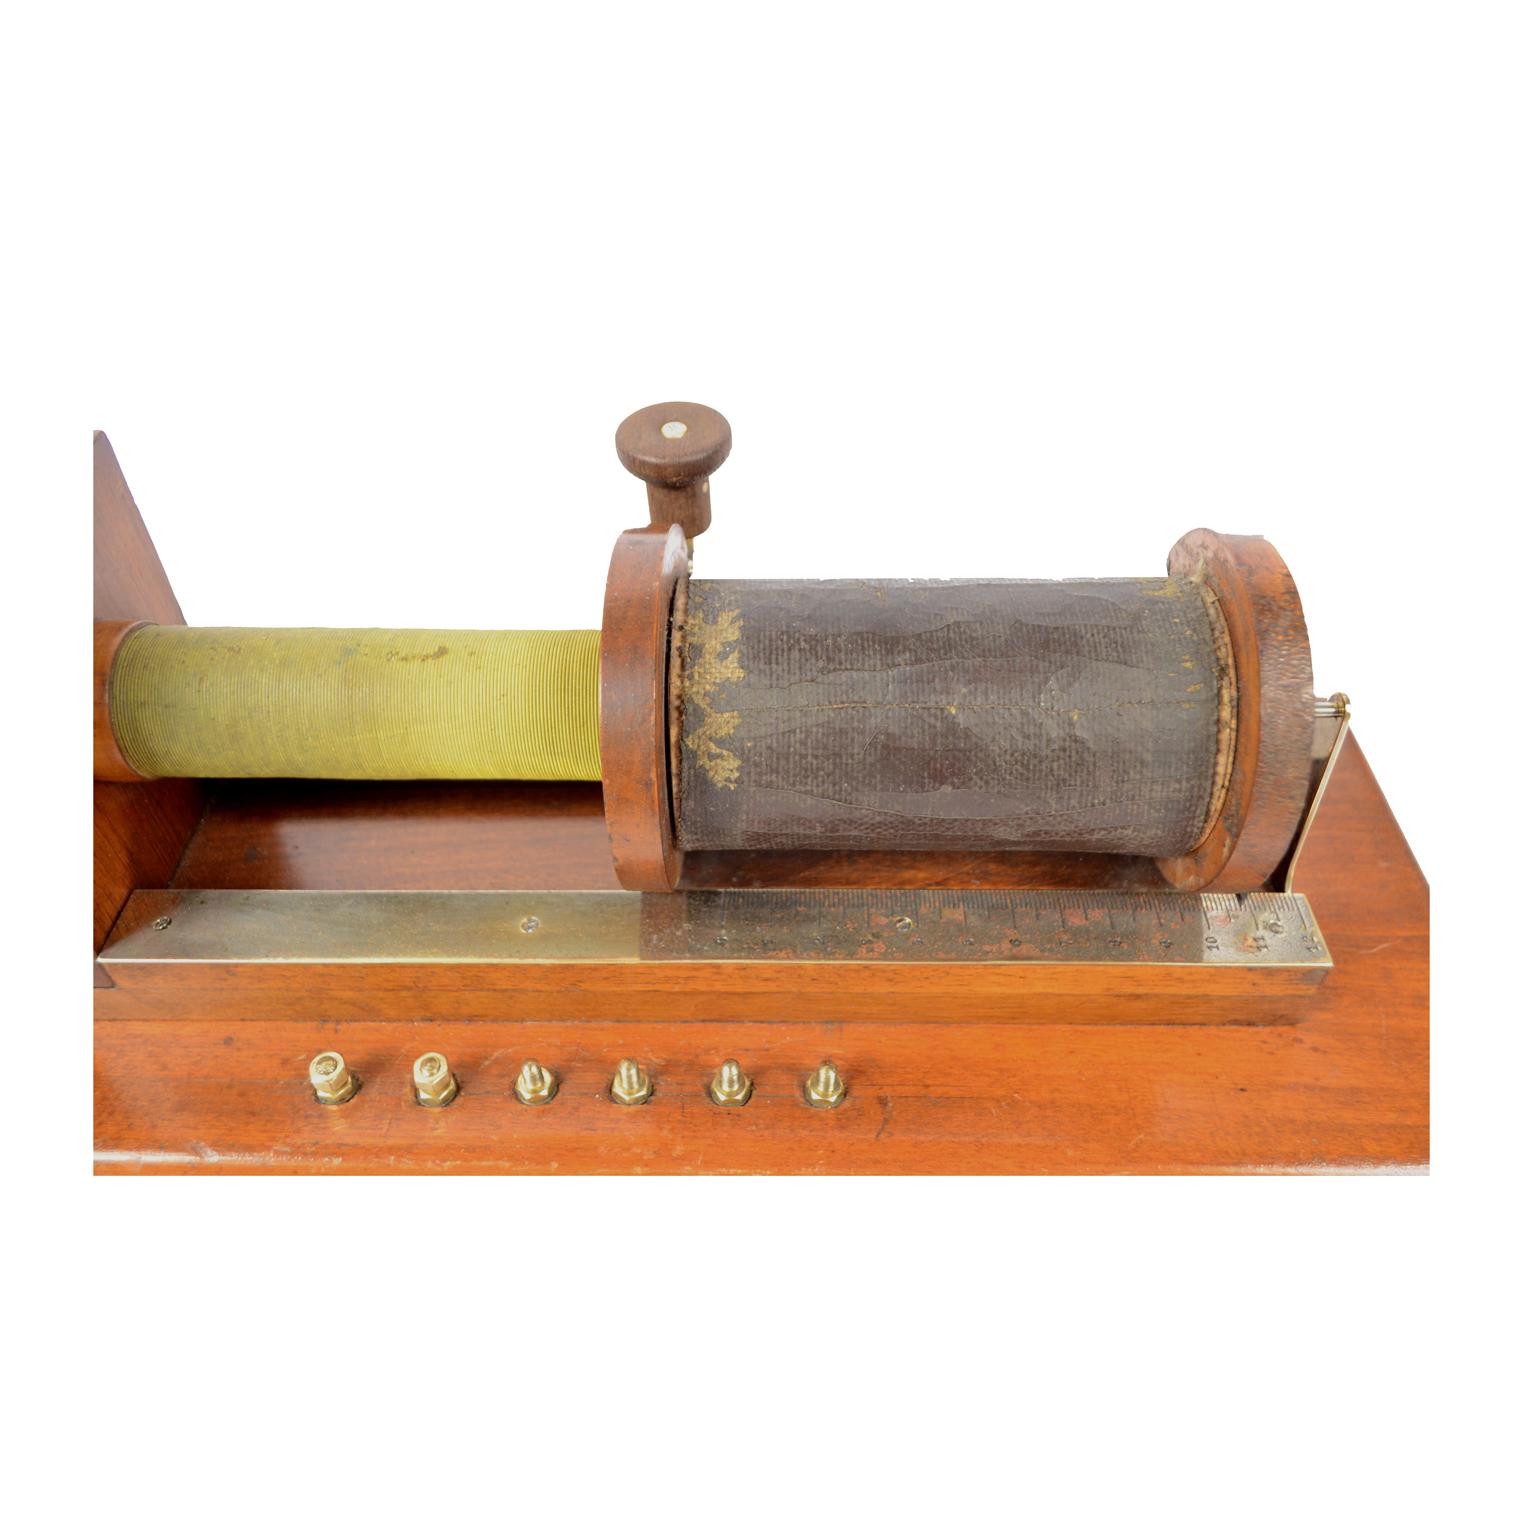 Induction Coil or Sled Antique Scientific Instrument by Du Bois Reymond 1870  For Sale 3